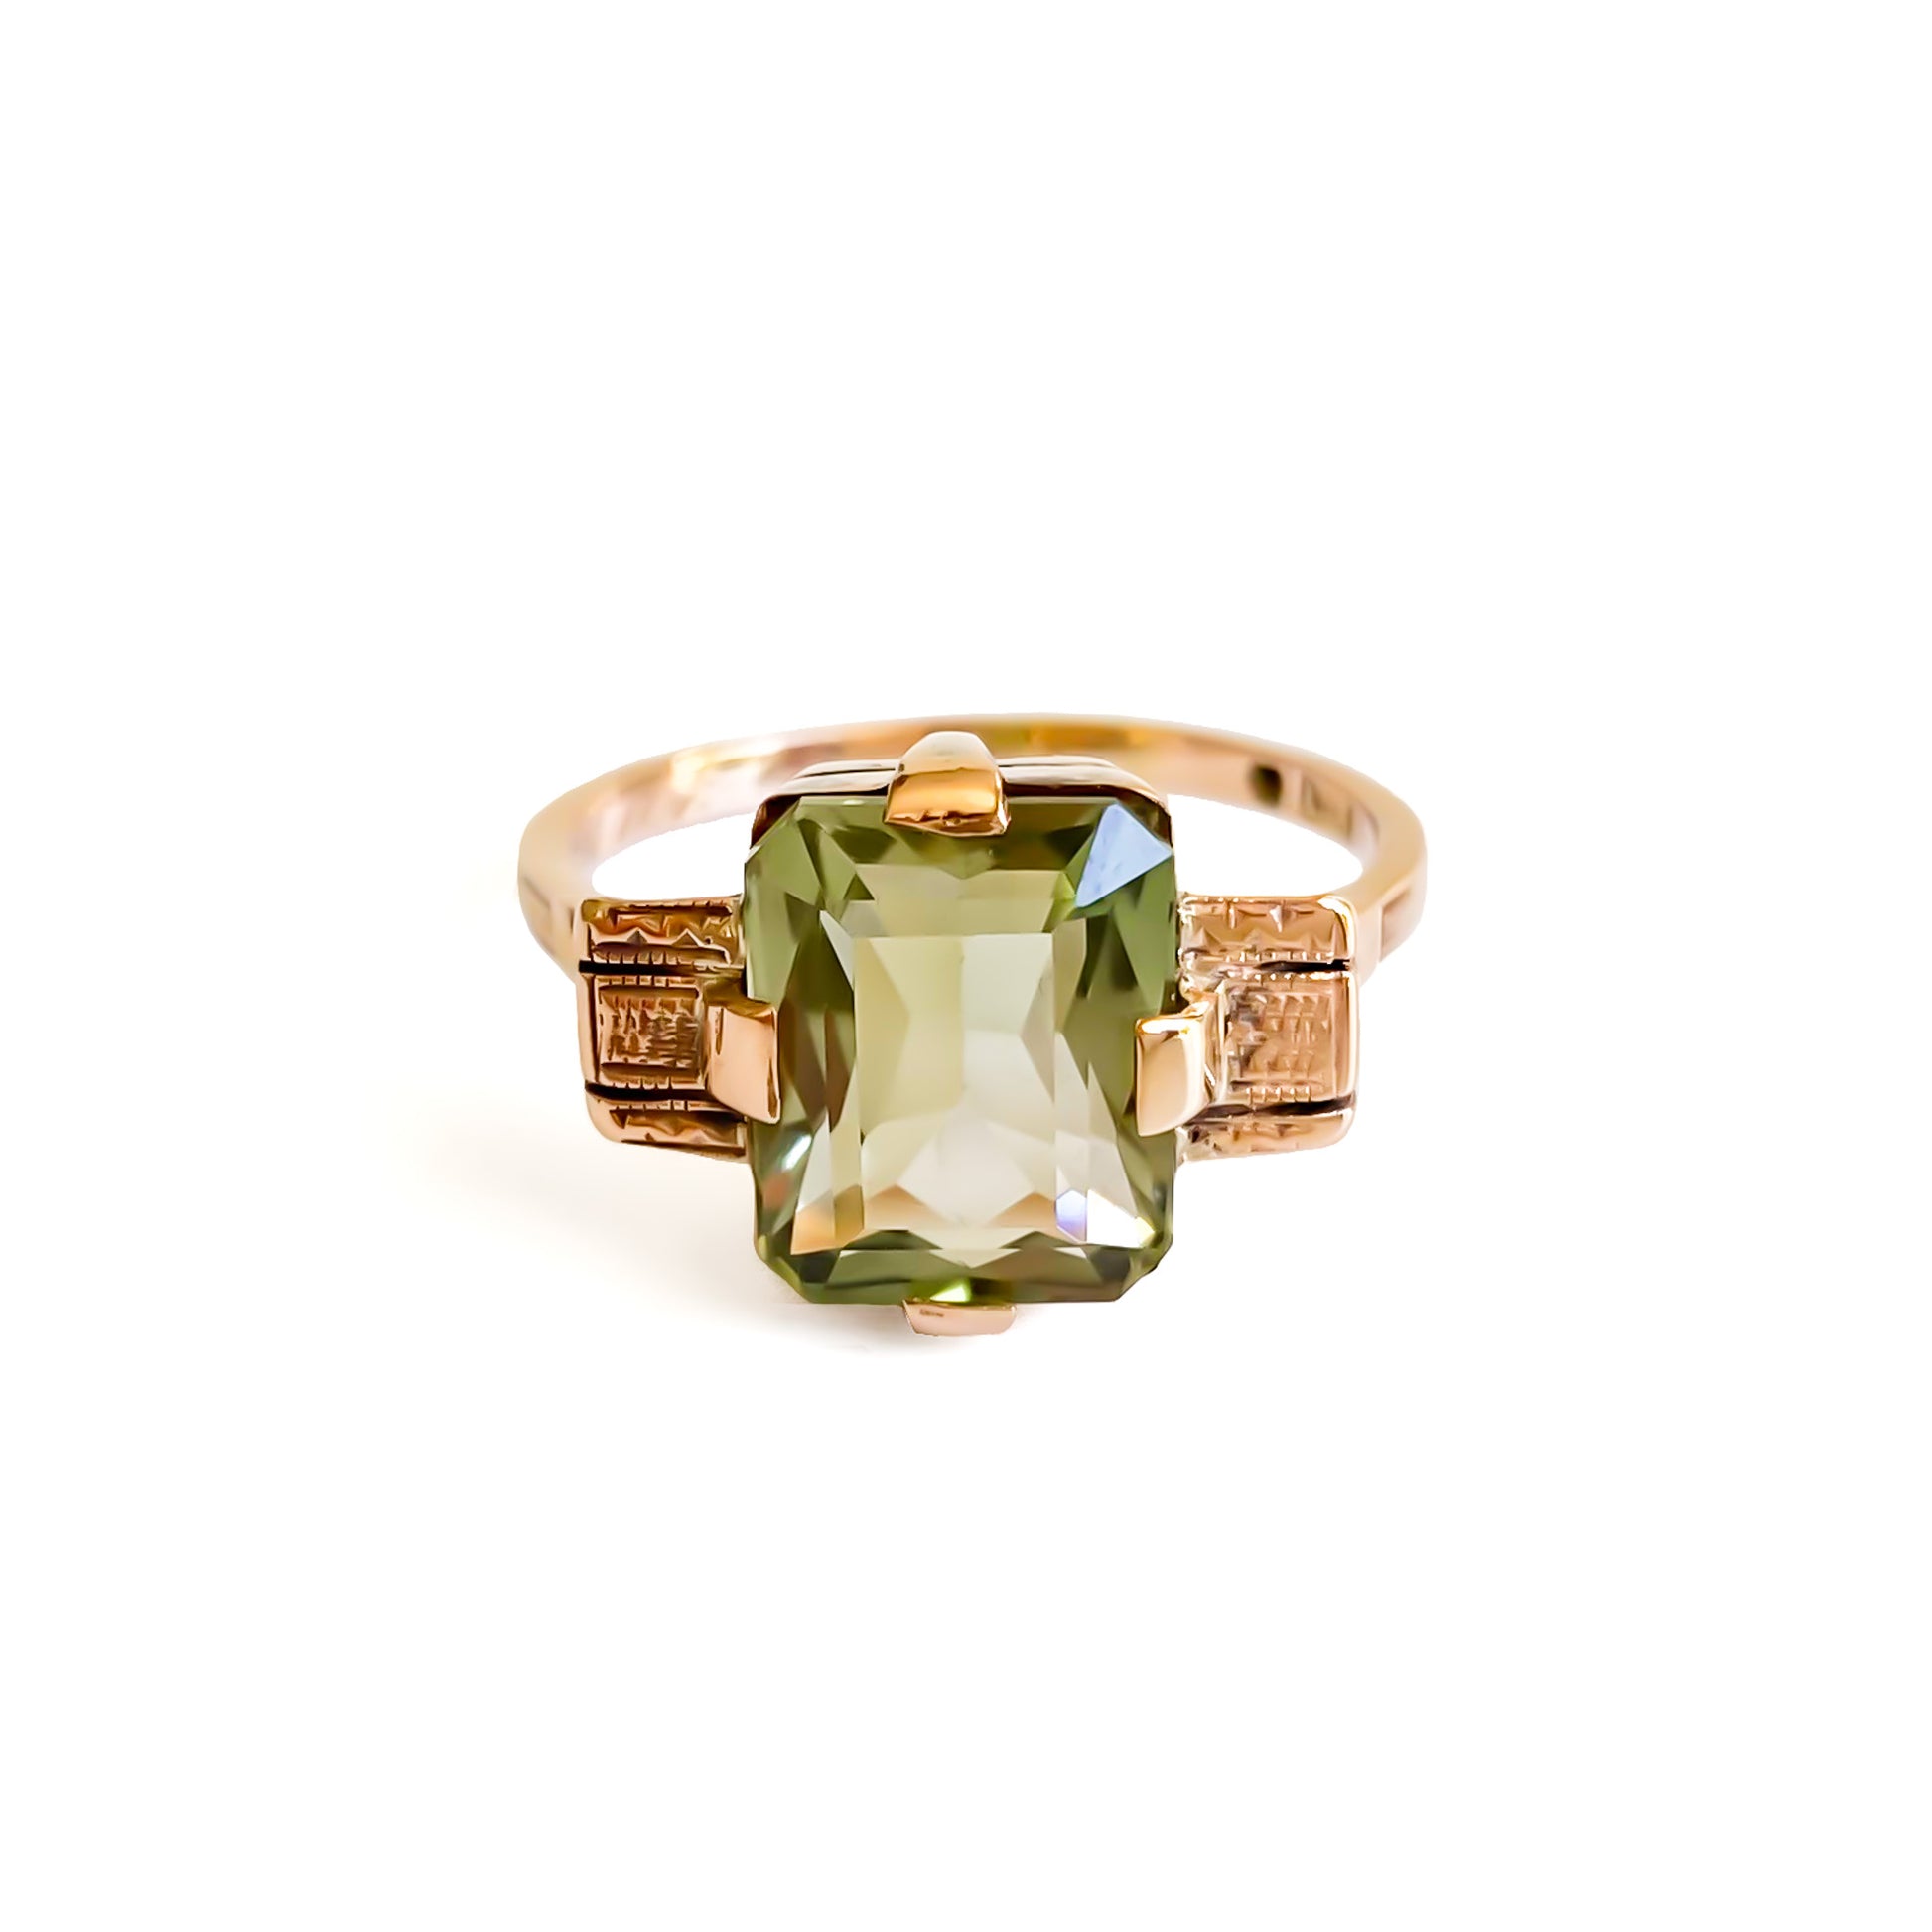 Art Deco 9ct rose gold ring set with a beautifully faceted green rectangular prasiolite gemstone.